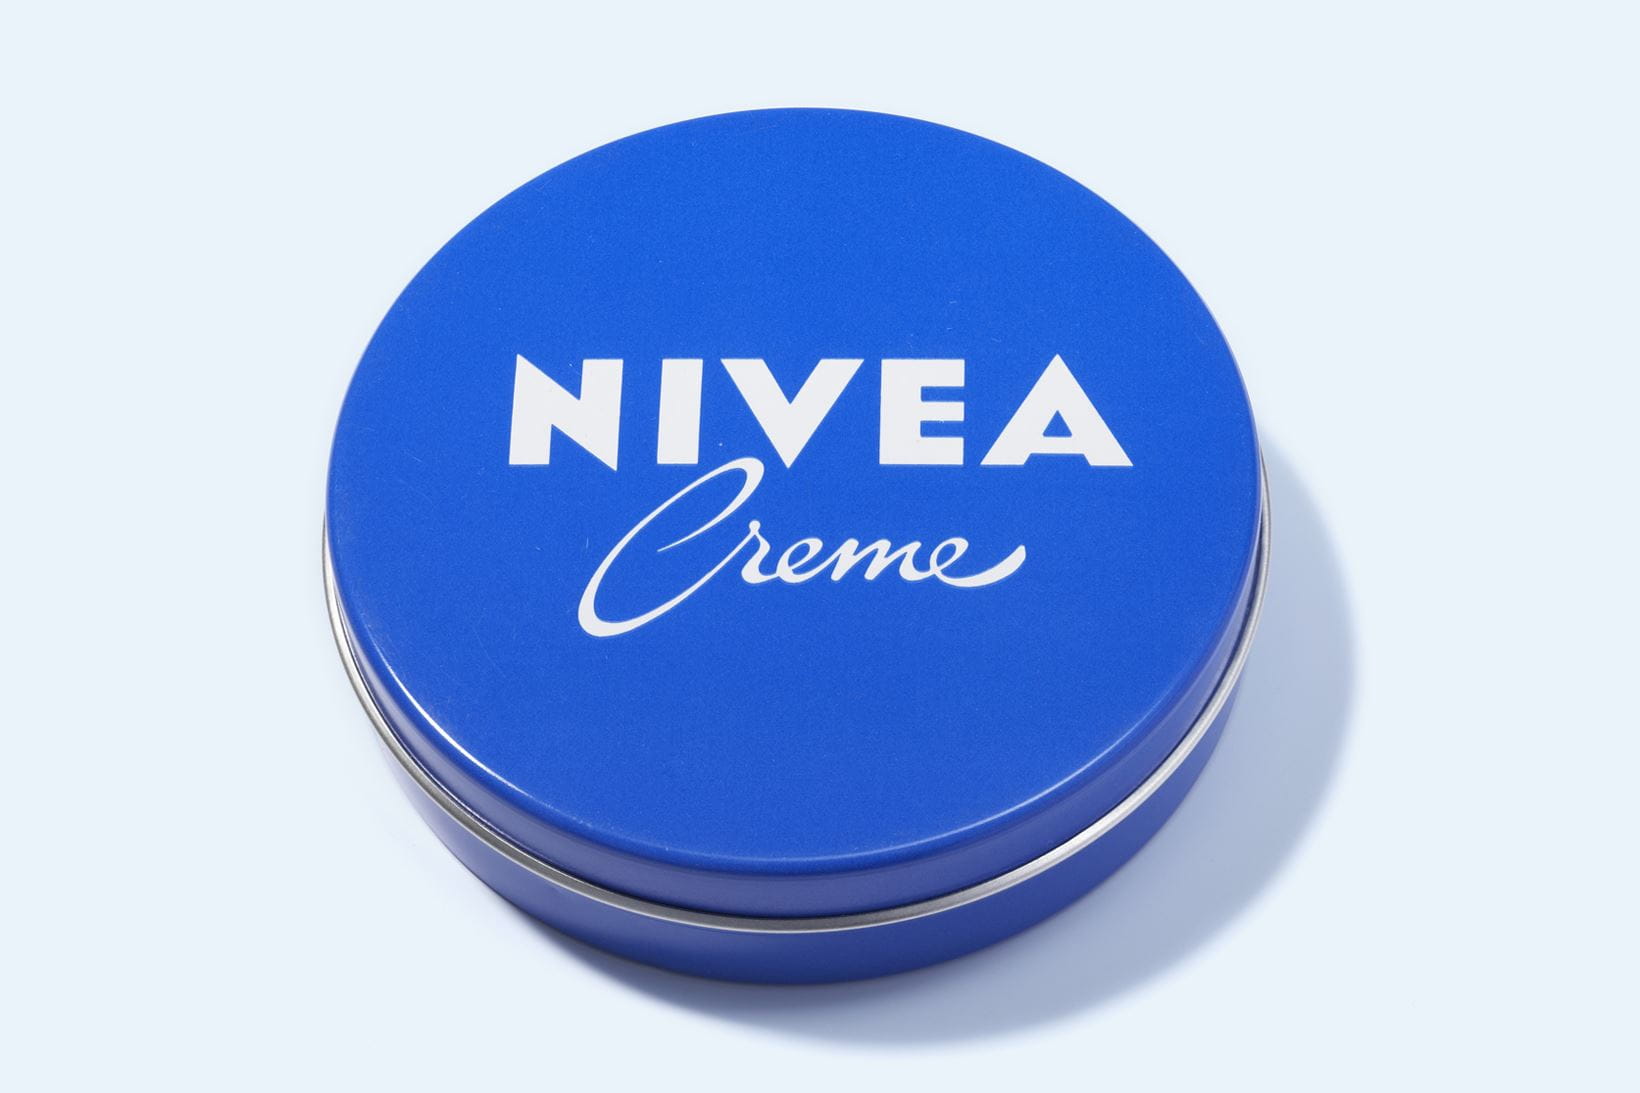 NIVEA Creme 1970